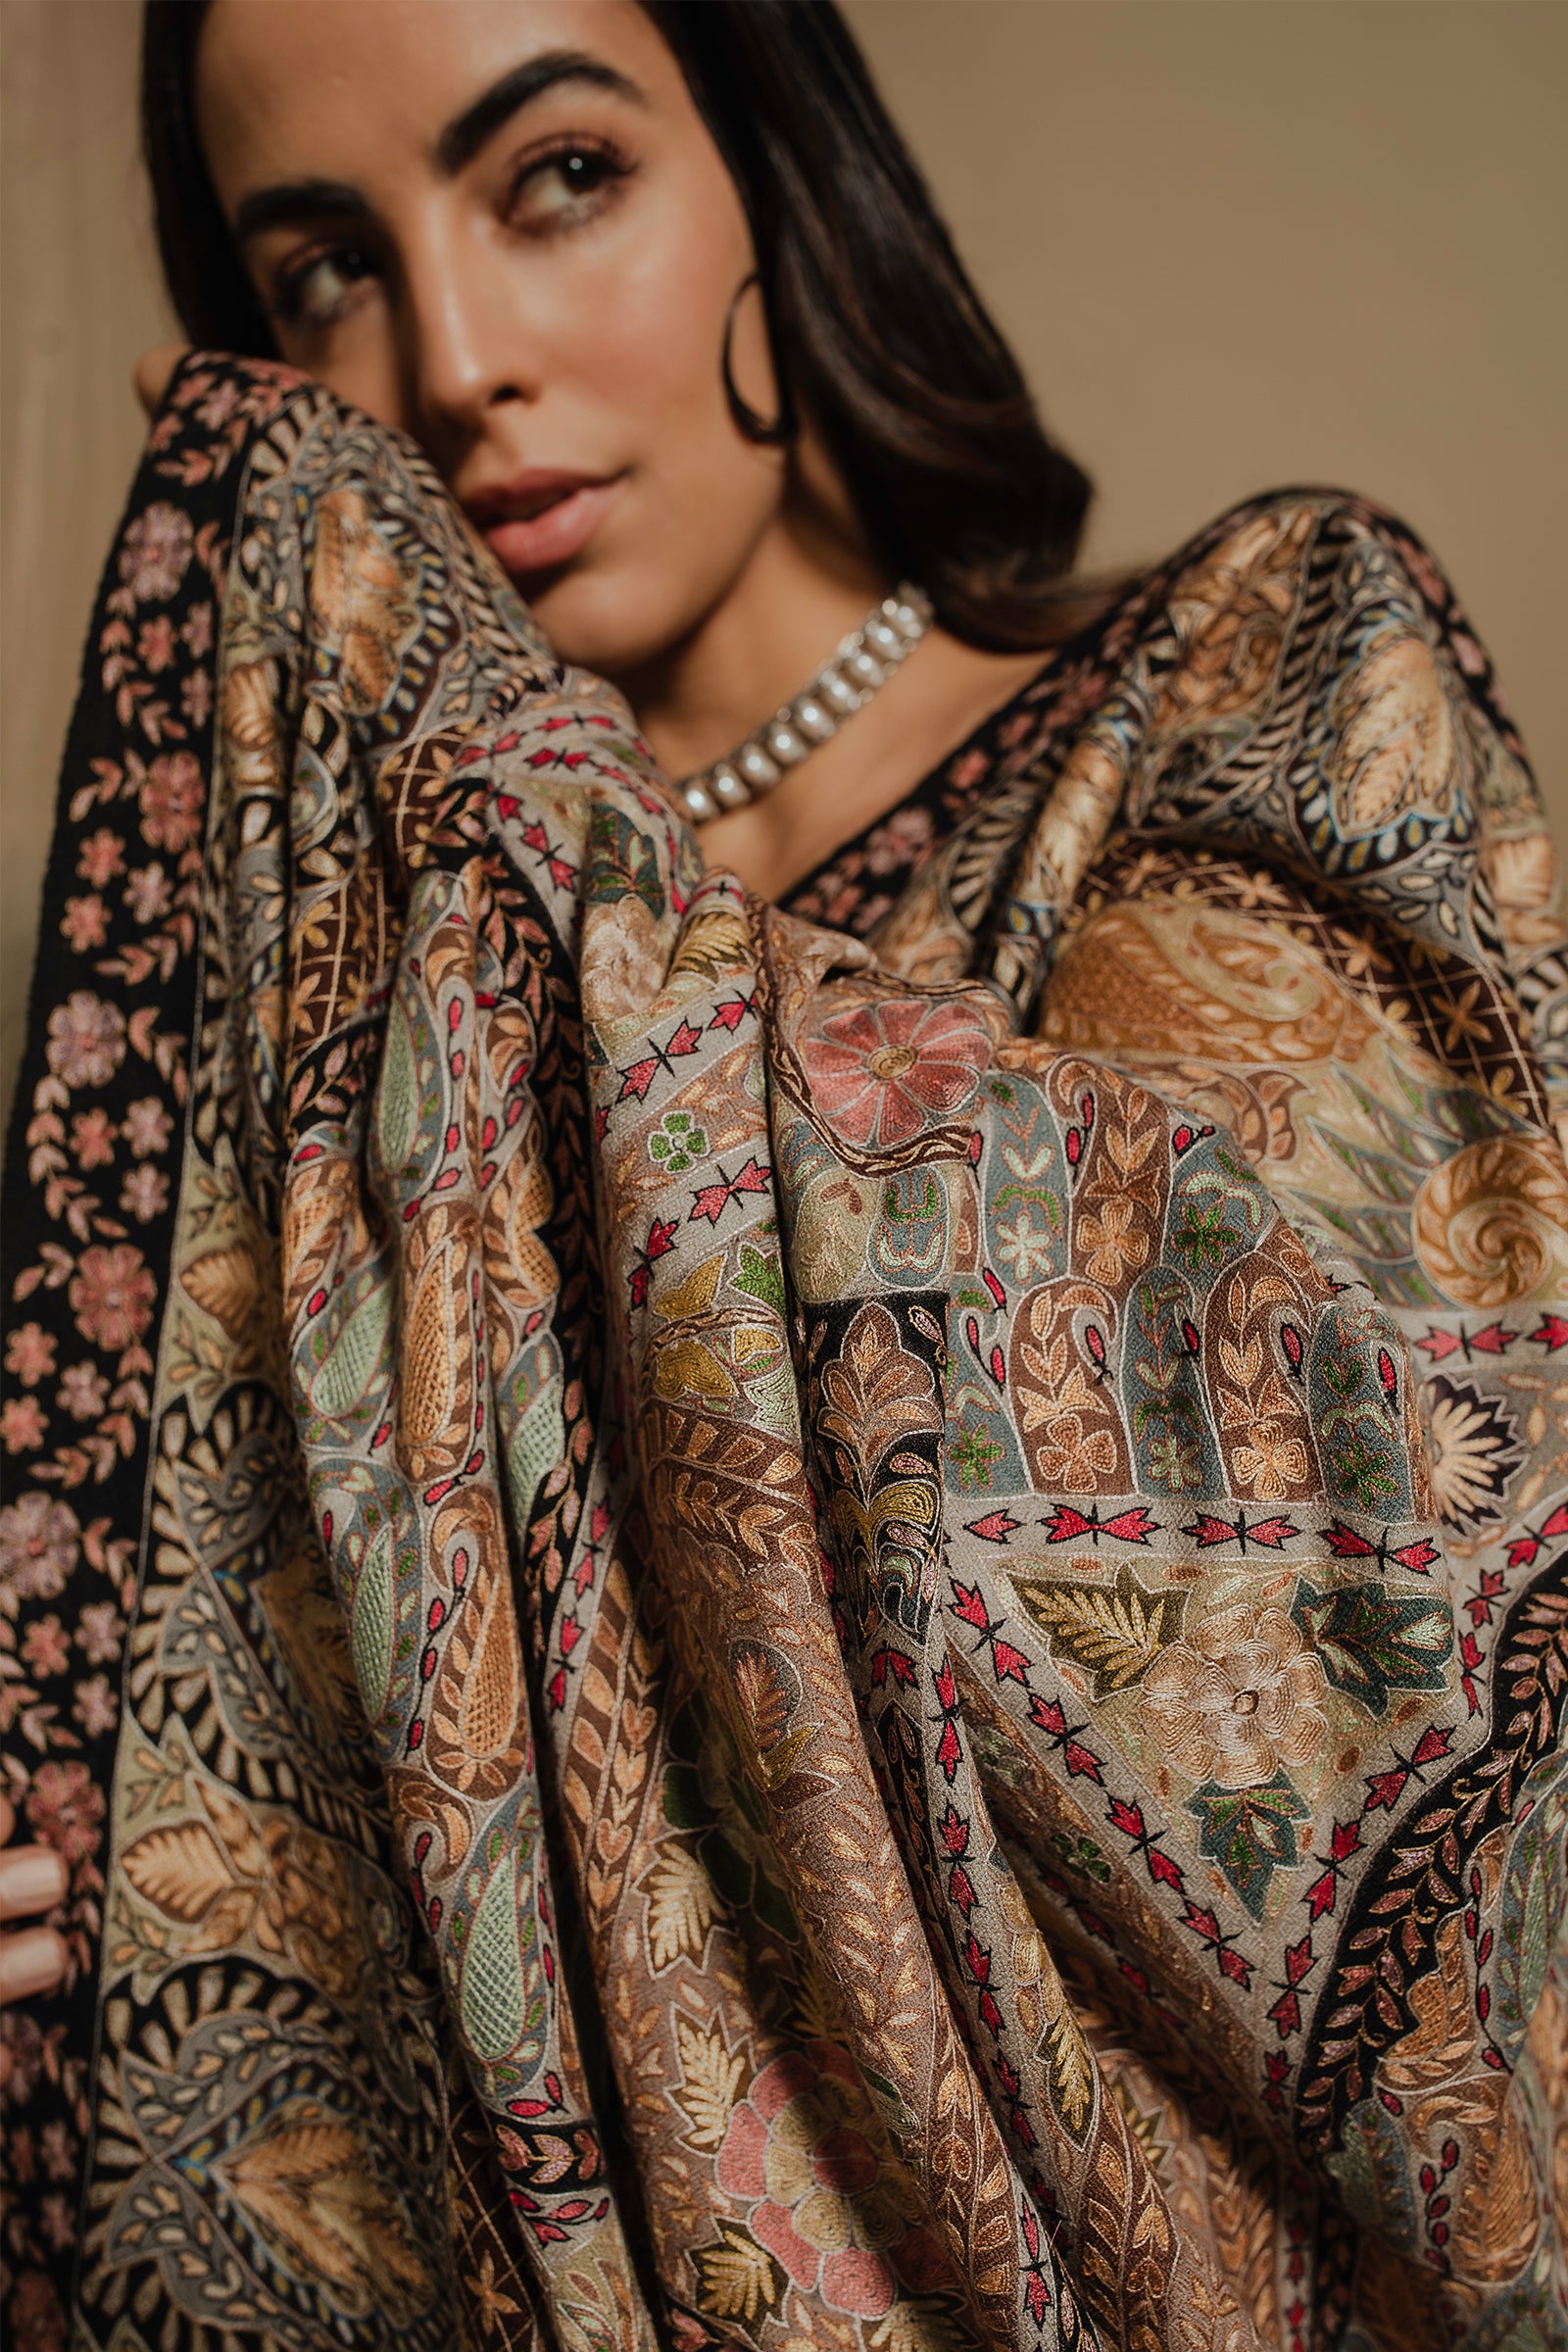 Model is wearing the Gulzar-e-Kalam Kalamkari Pashmina shawl from Shaza.